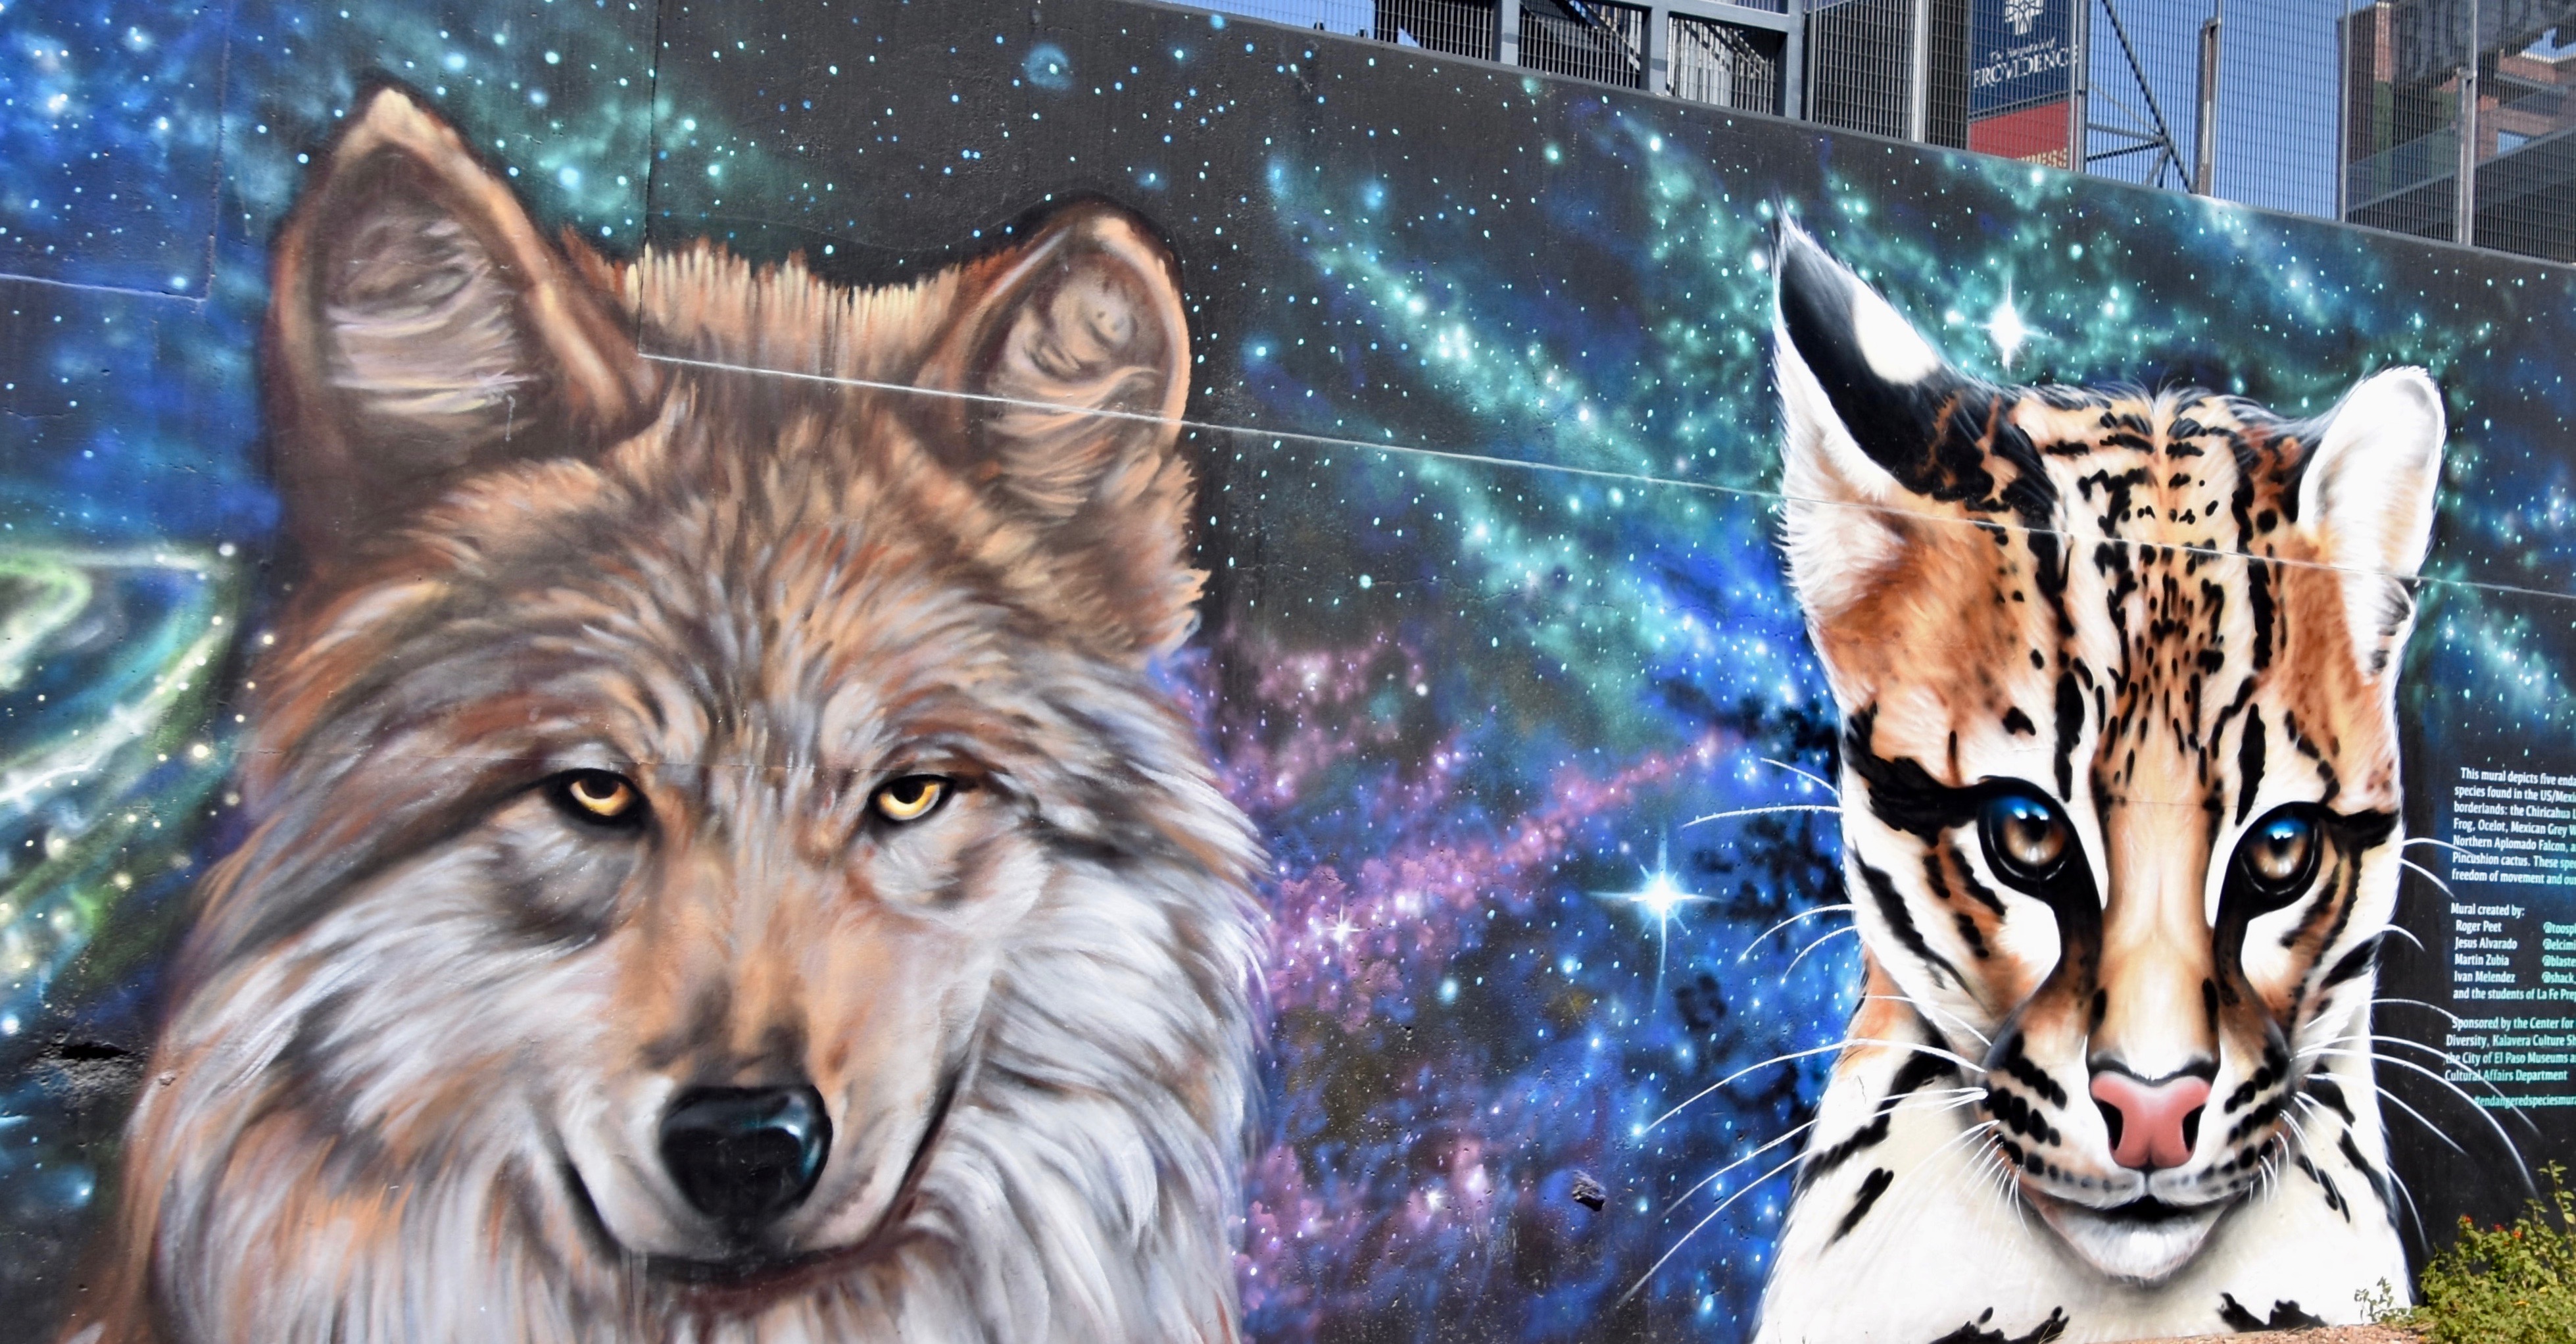 Wolf & Ocelot Mural, El Paso